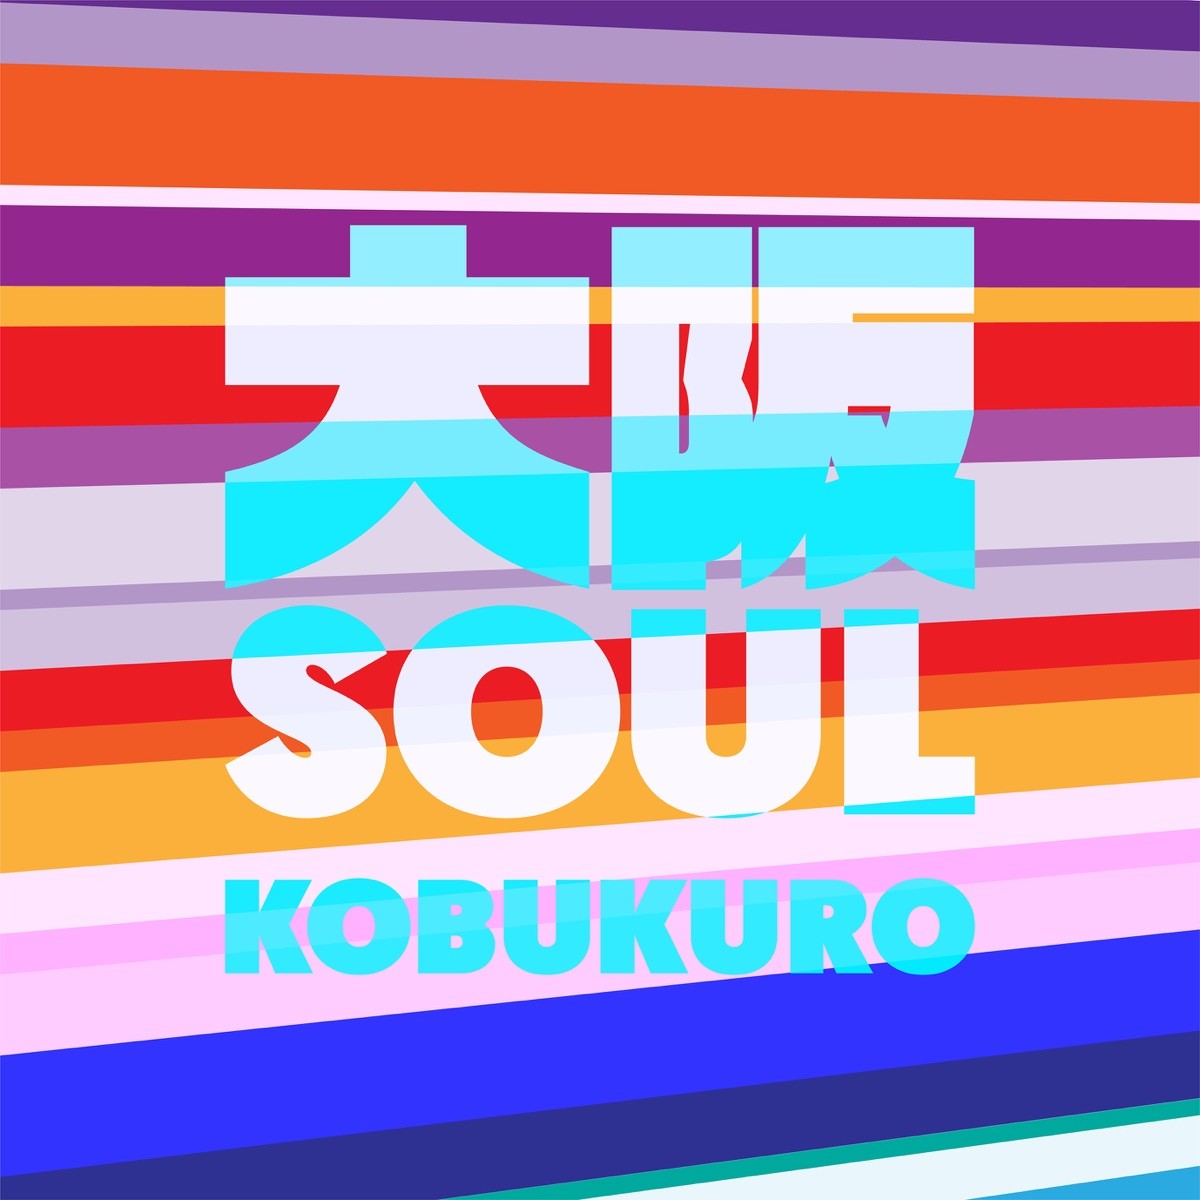 Kobukuro (コブクロ) – 大阪SOUL [FLAC / WEB] [2019.12.04]